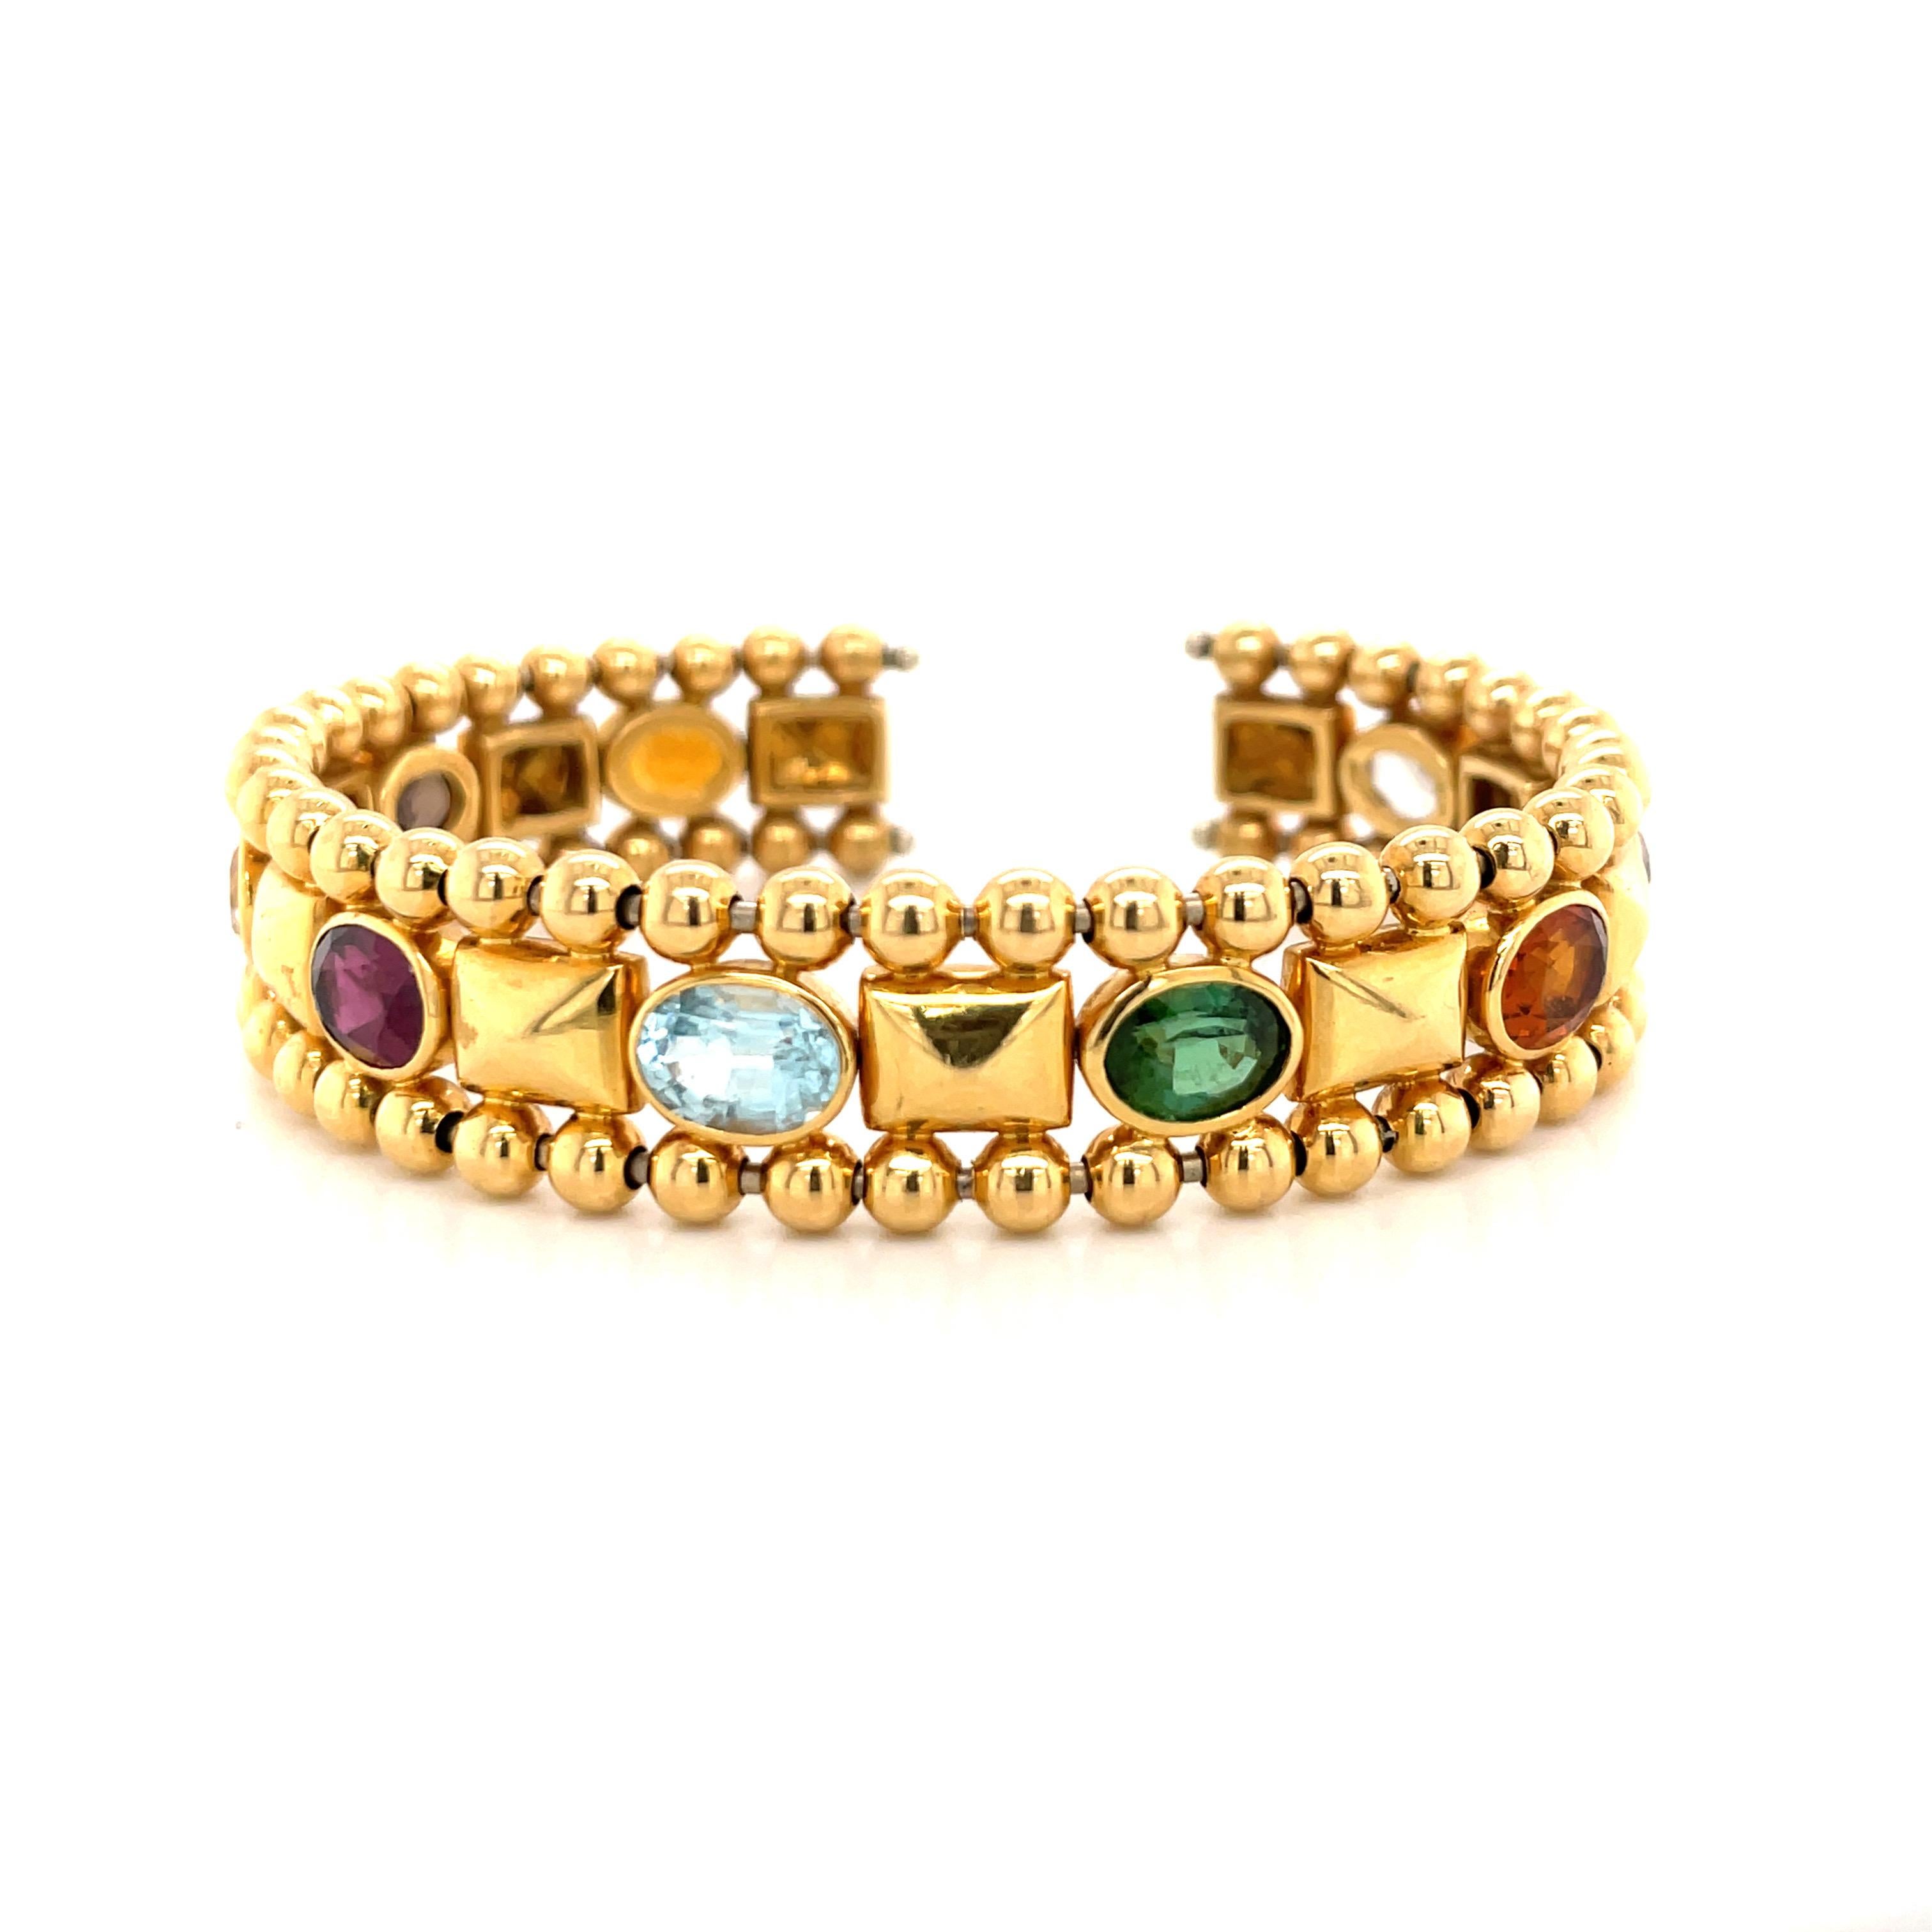 18 Karat Yellow Gold cuff bracelet featuring 9 oval shape semi-precious stones weighing 45.2 grams.
Semi-Precious Colors: White, Purple, Orange, Green, Blue, Red, Smokey Topaz
Very Comfortable on the wrist!